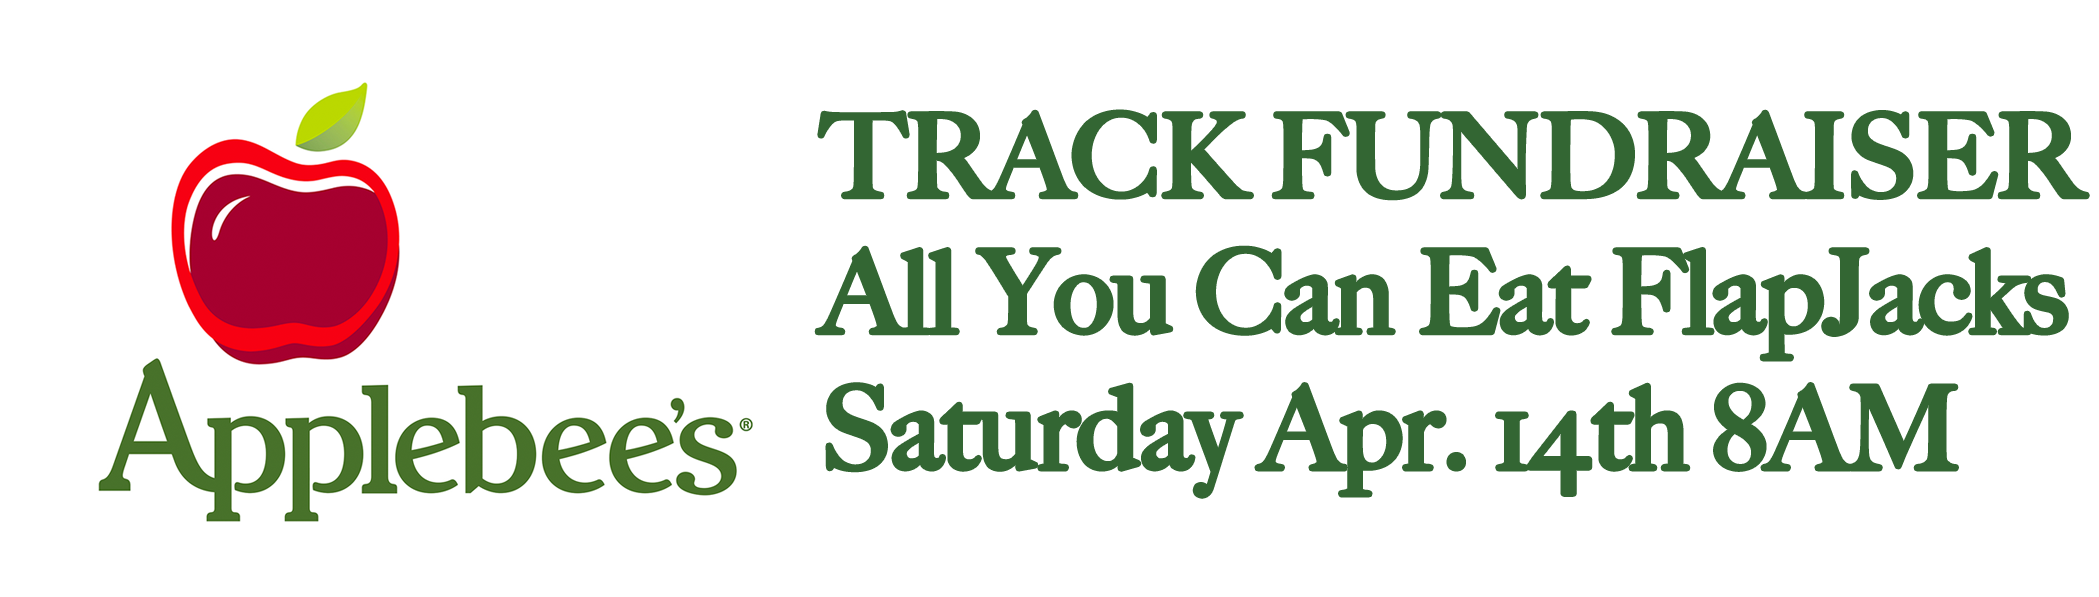 track fundraiser